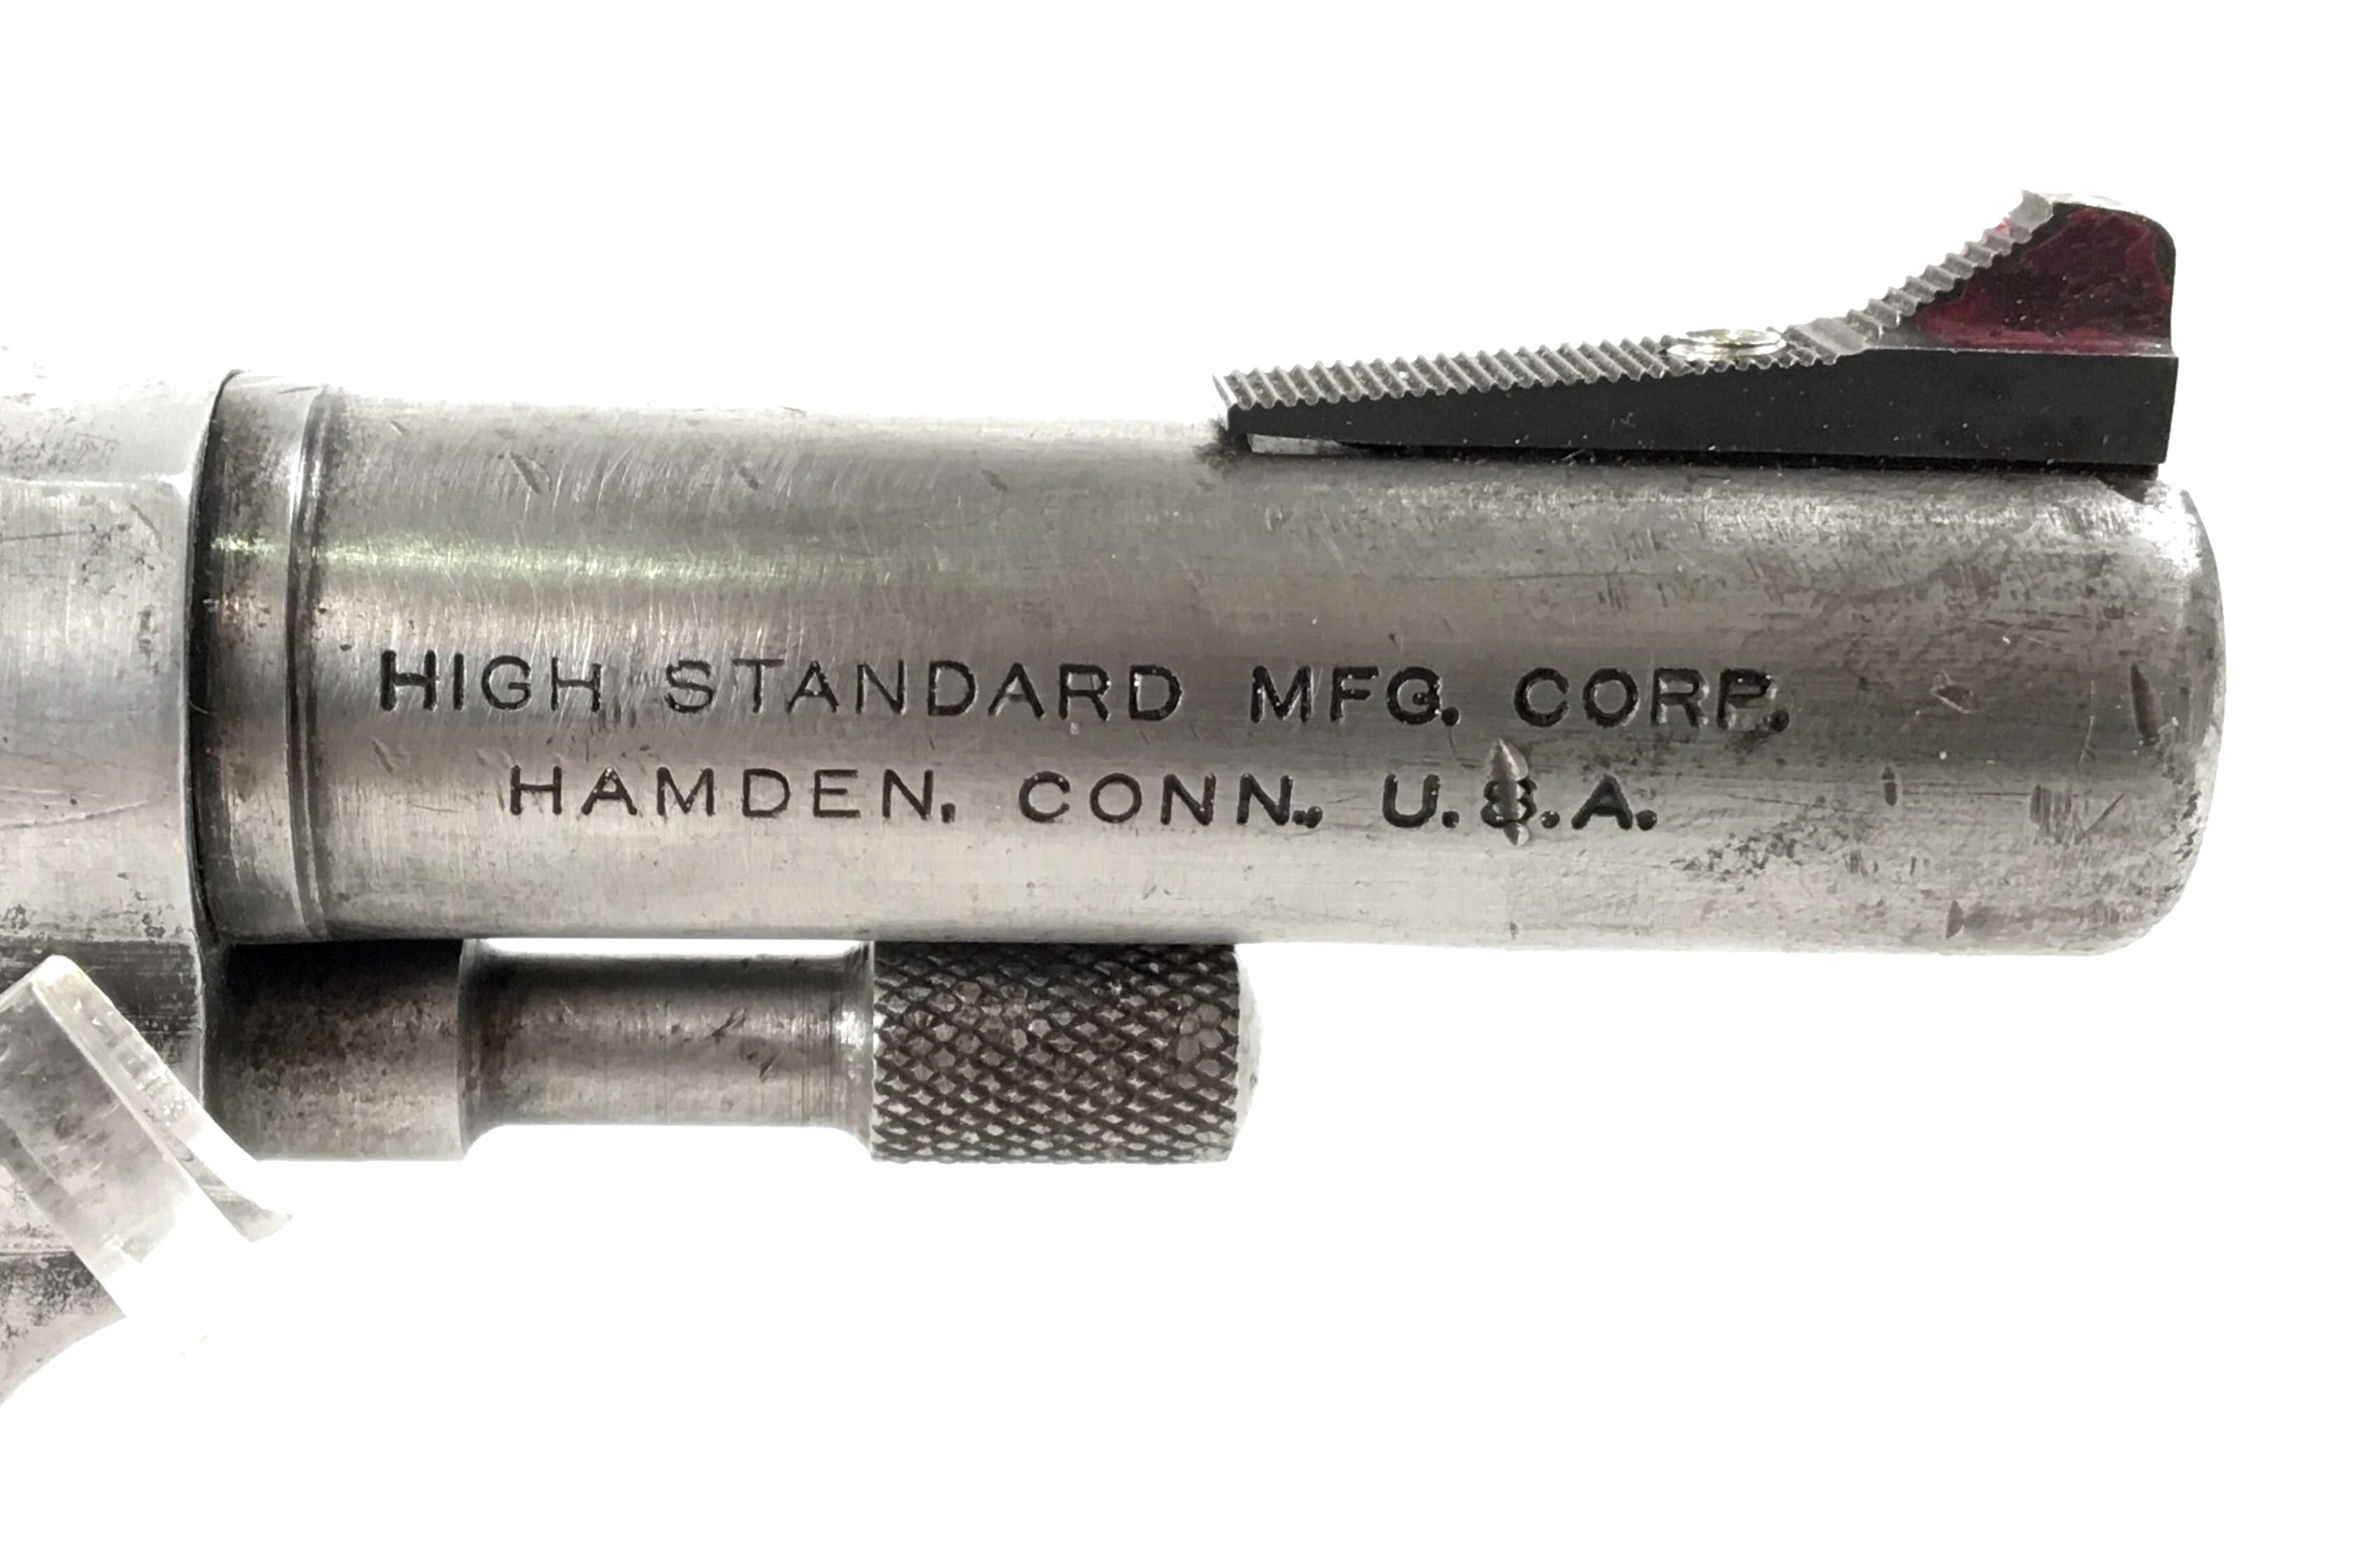 Hi-standard R-101 Sentinel .22 Cal 9-shot Revolver